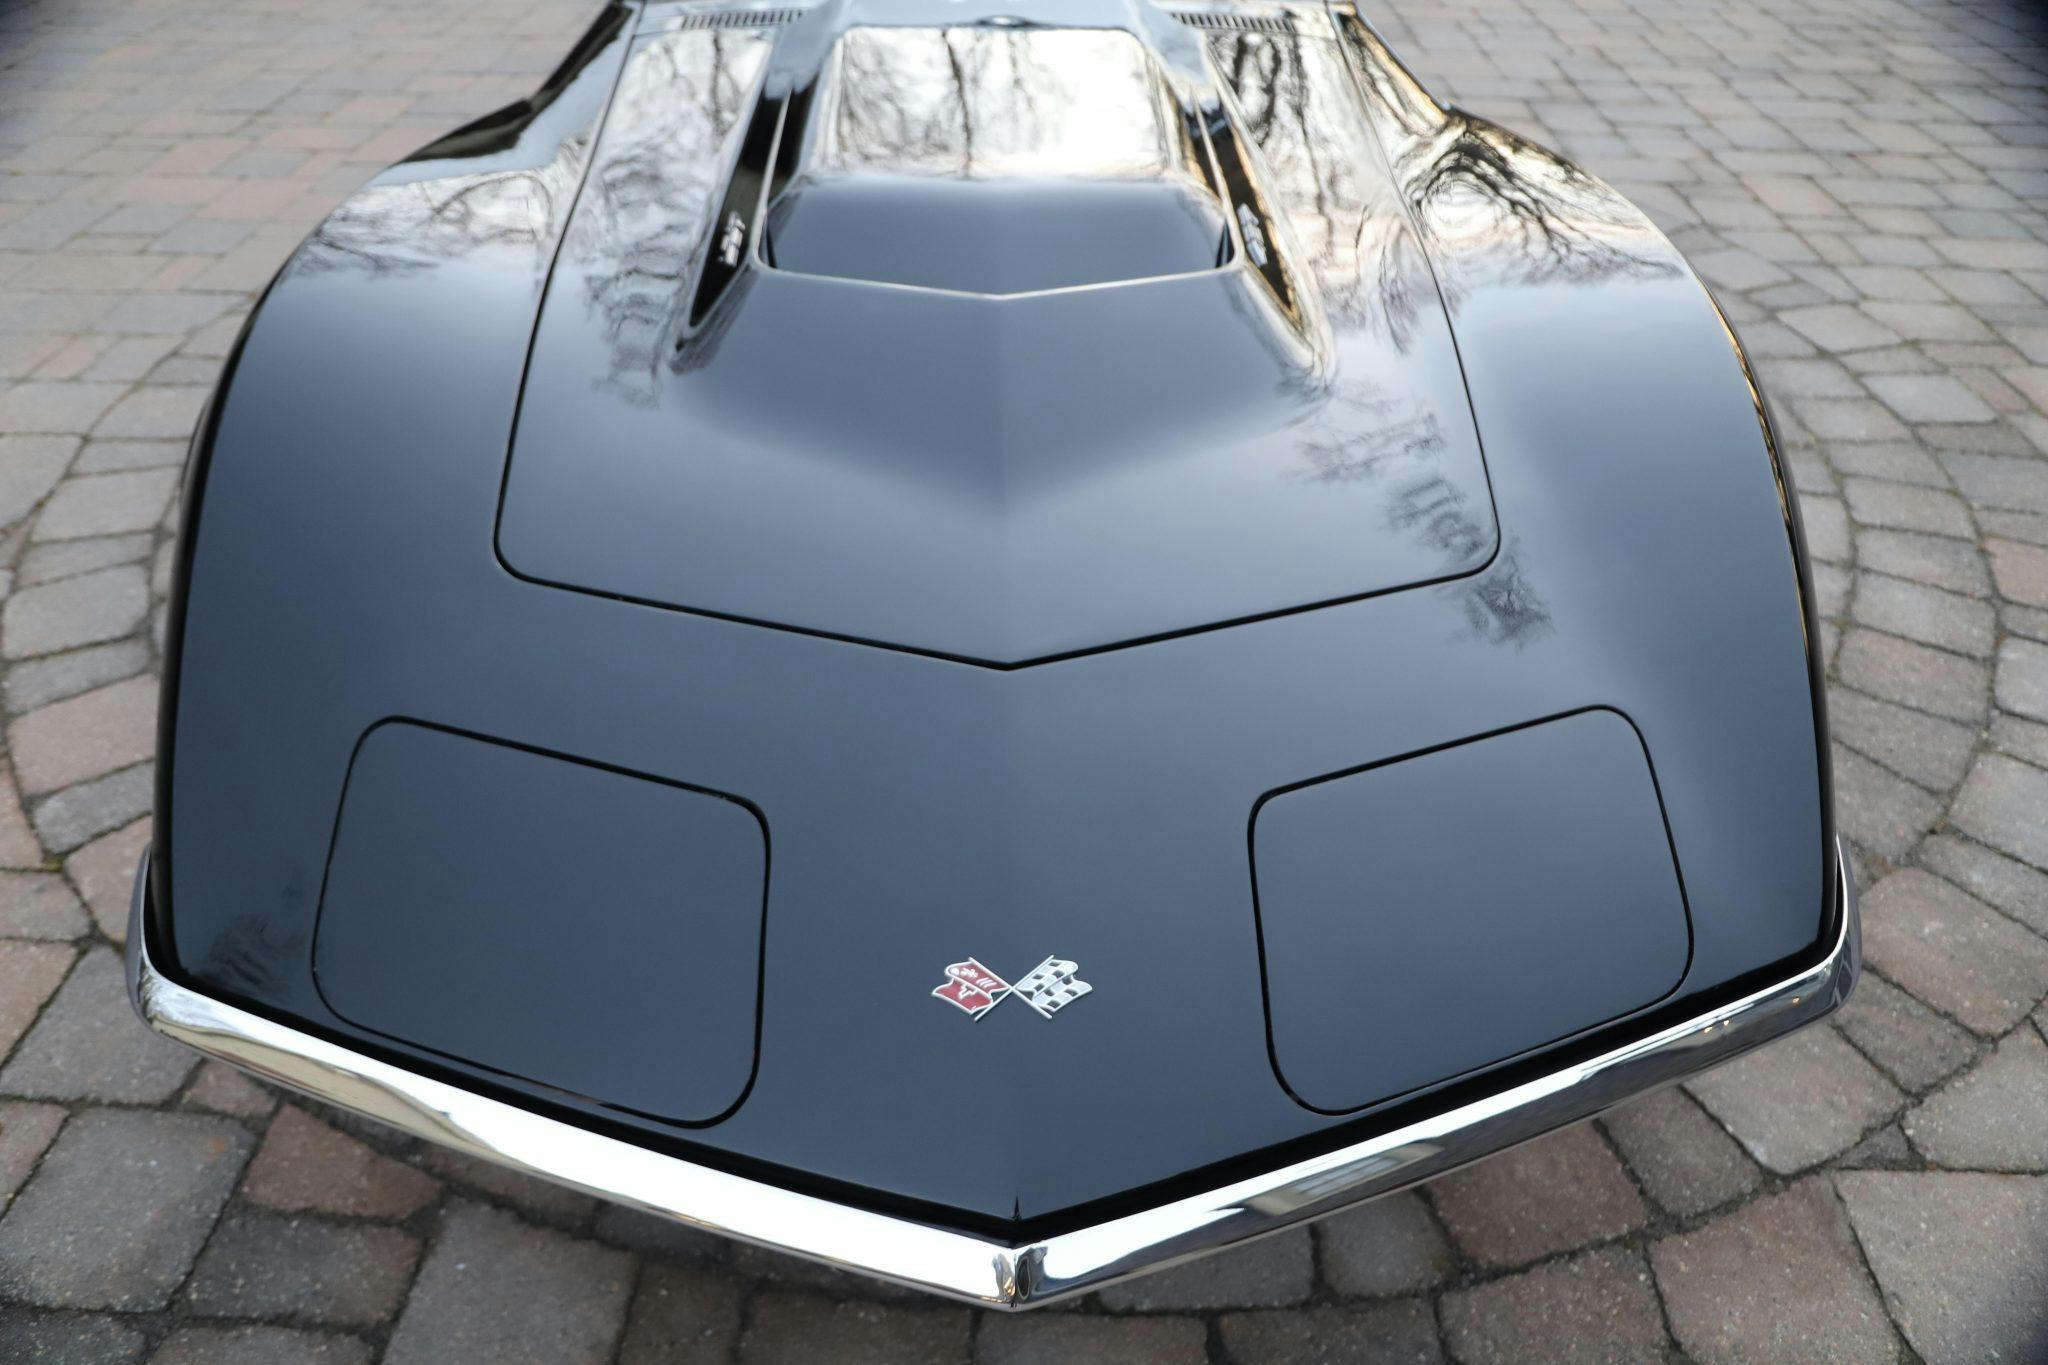 1969 Chevrolet Corvette L88 coupe Tuxedo Black hood front